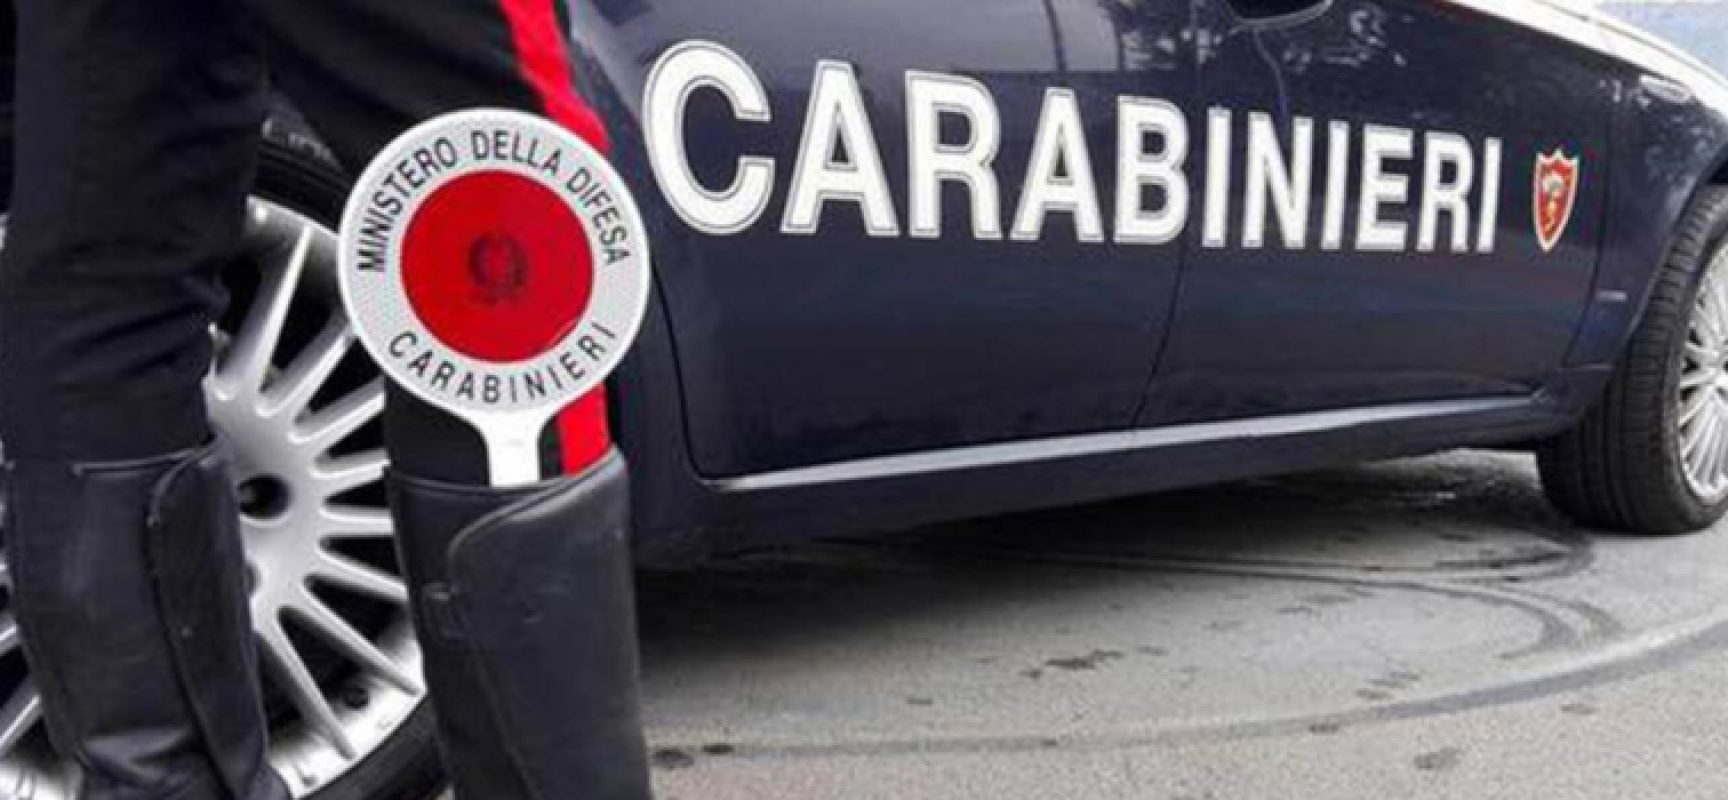 Carabinieri: al via concorso per 4189 posti / DETTAGLI